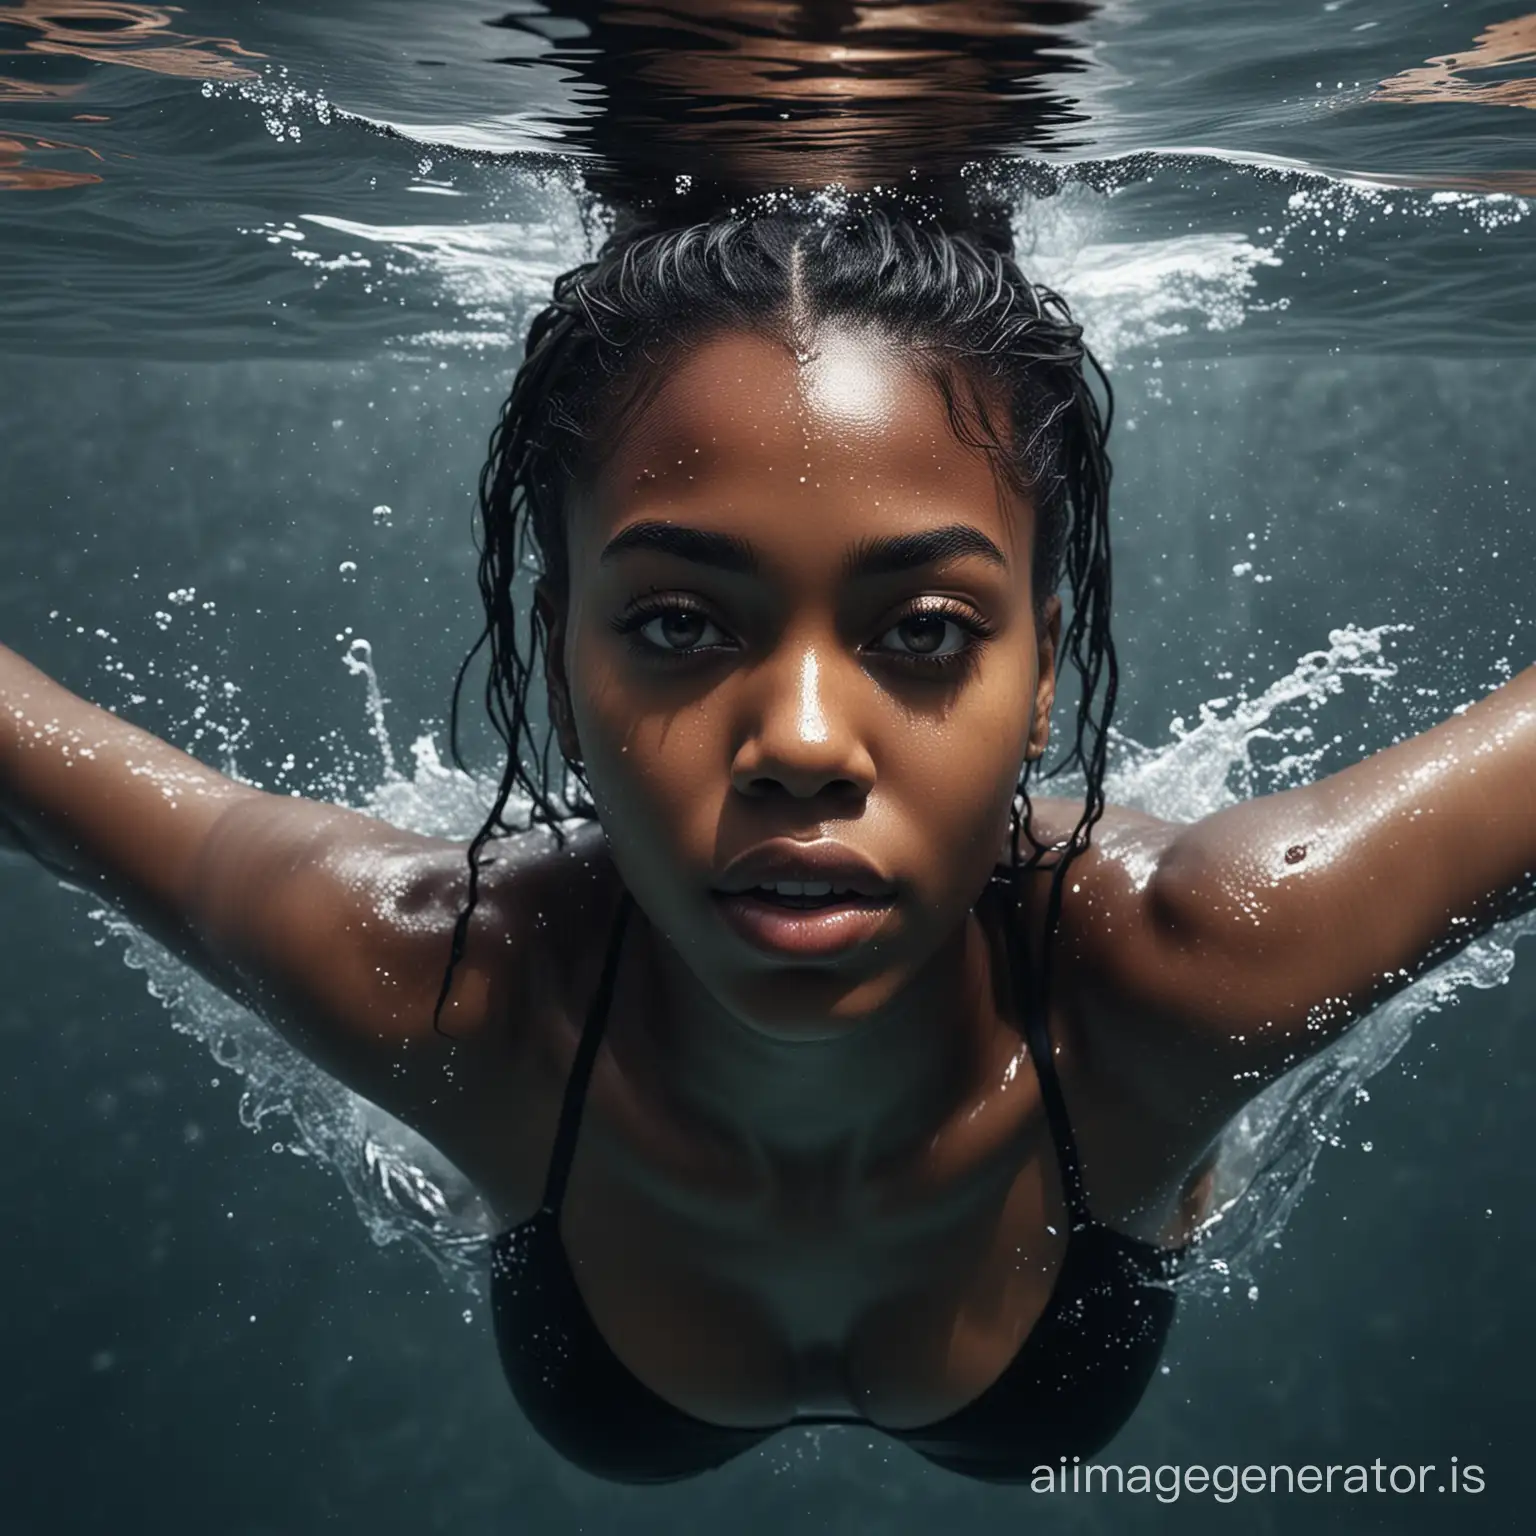 Black girl drowns inside water, hyper-realistic, 8k image